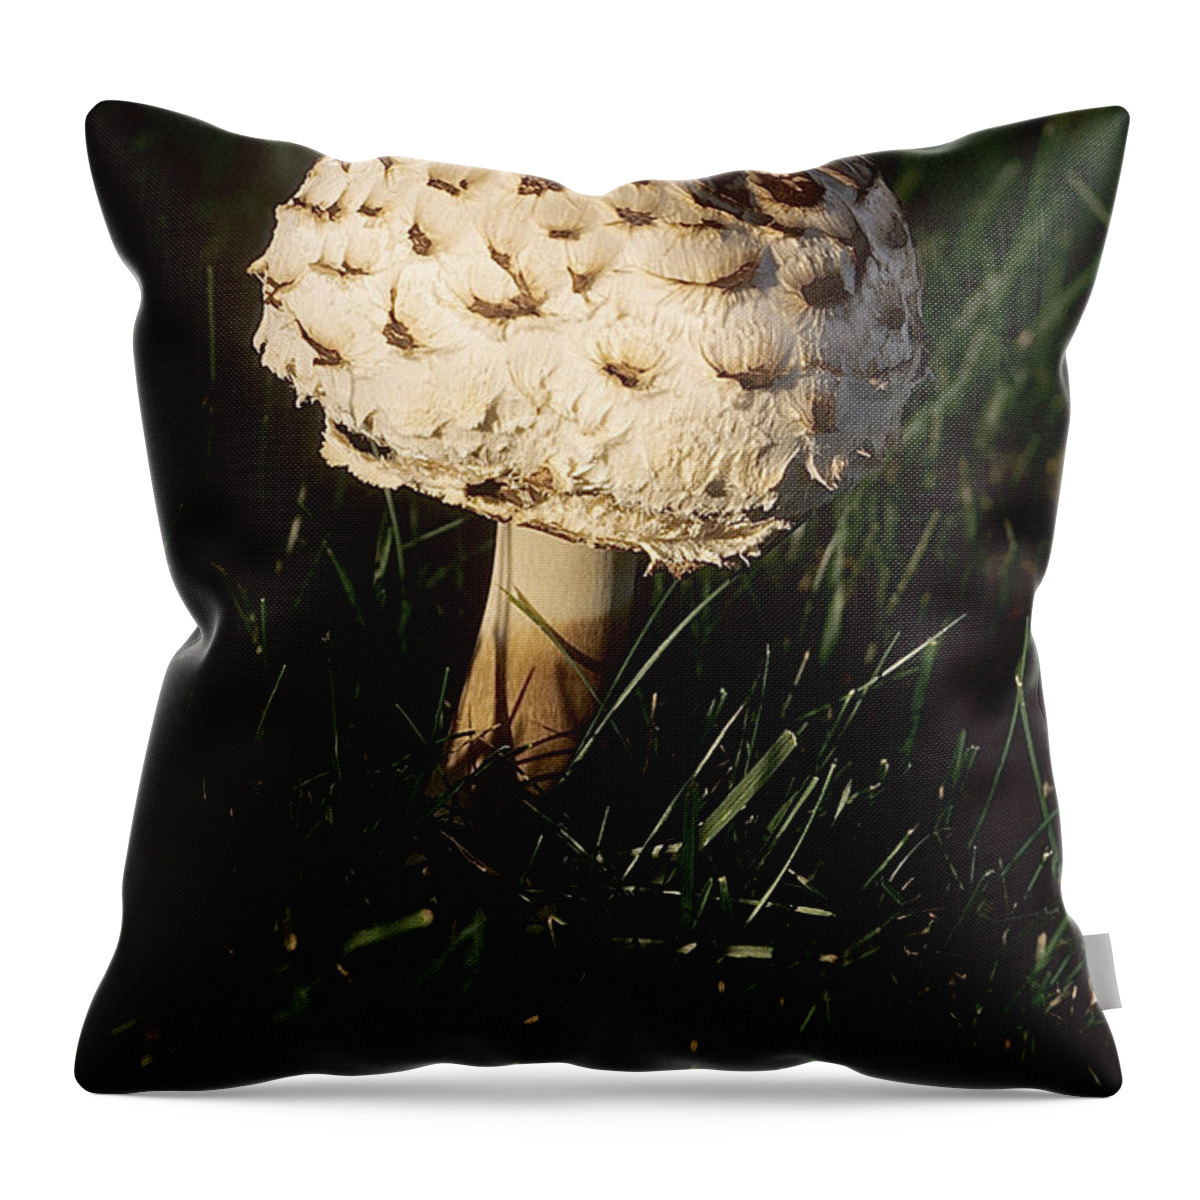 Mushrooms Throw Pillow featuring the photograph Mushrooms VI by Sharon Elliott